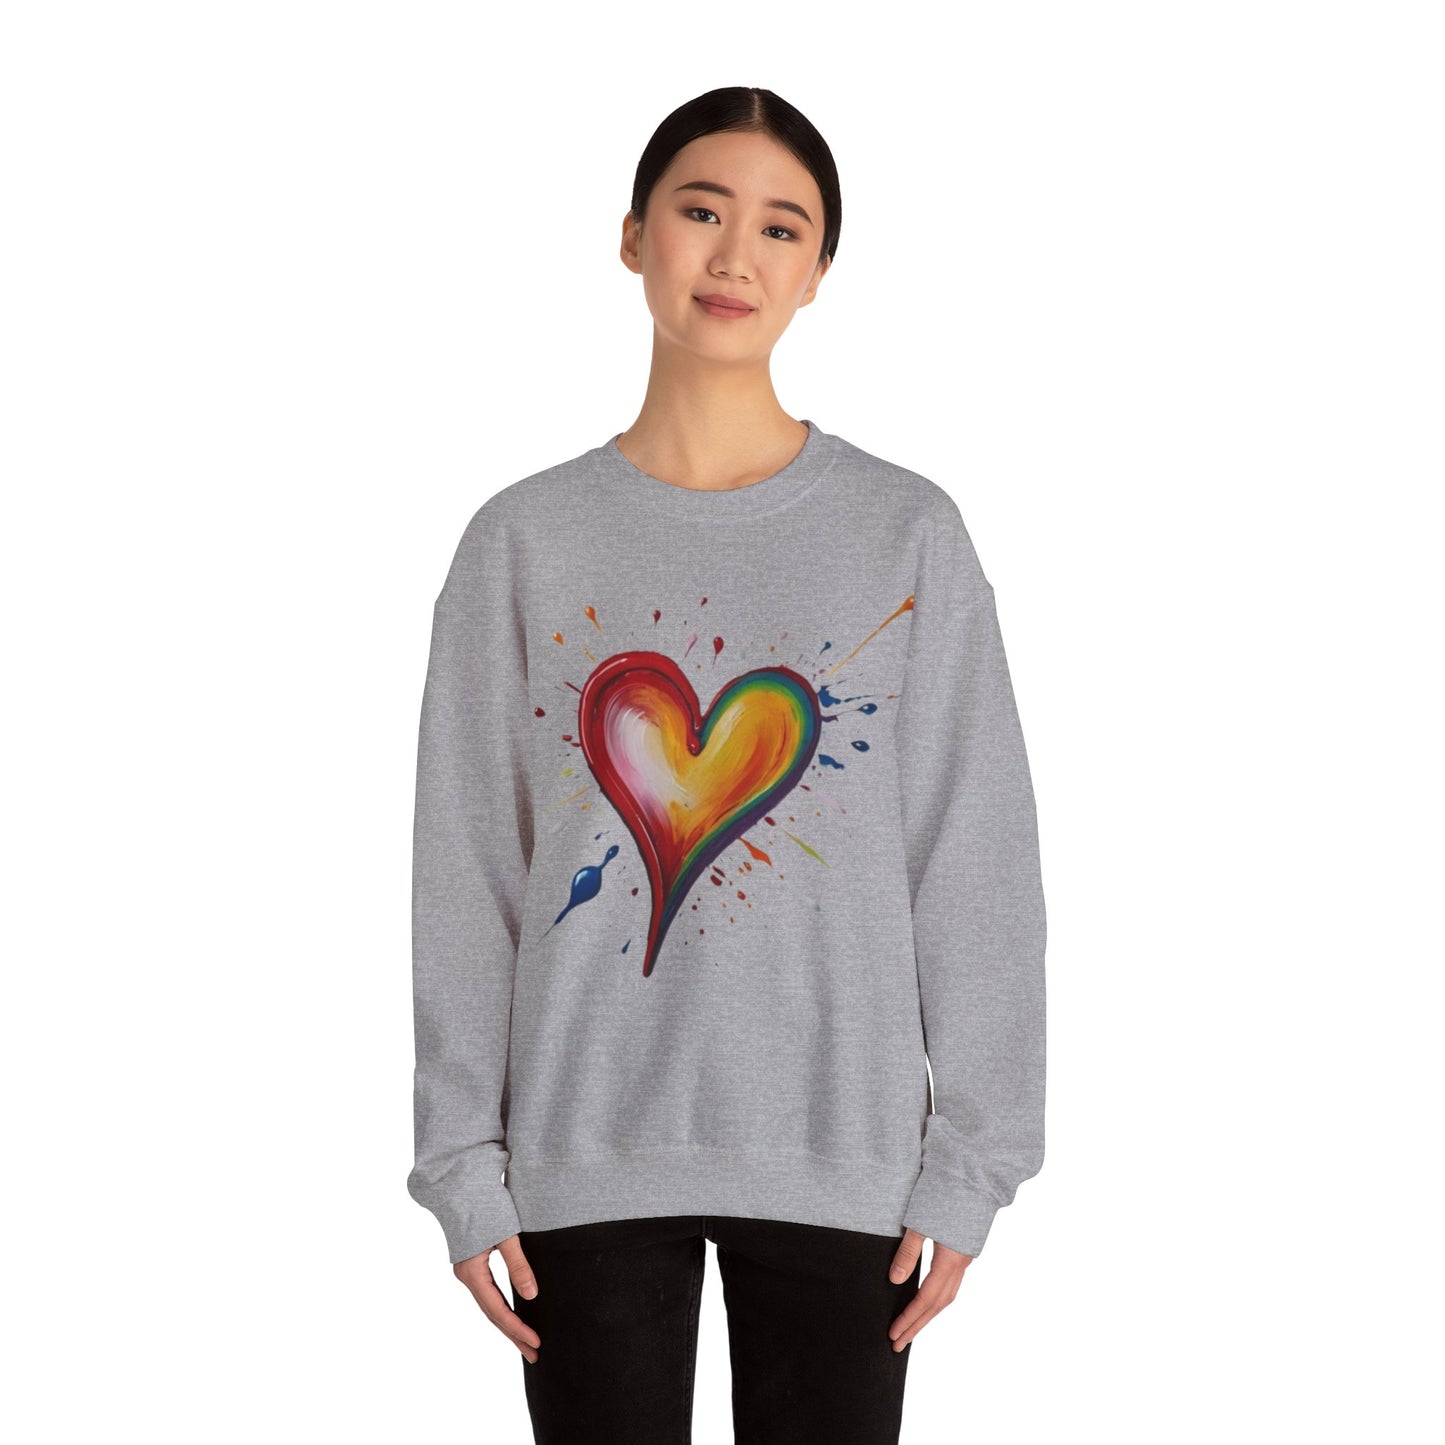 Messy Painted Colourful Slanted Love Heart - Unisex Crewneck Sweatshirt